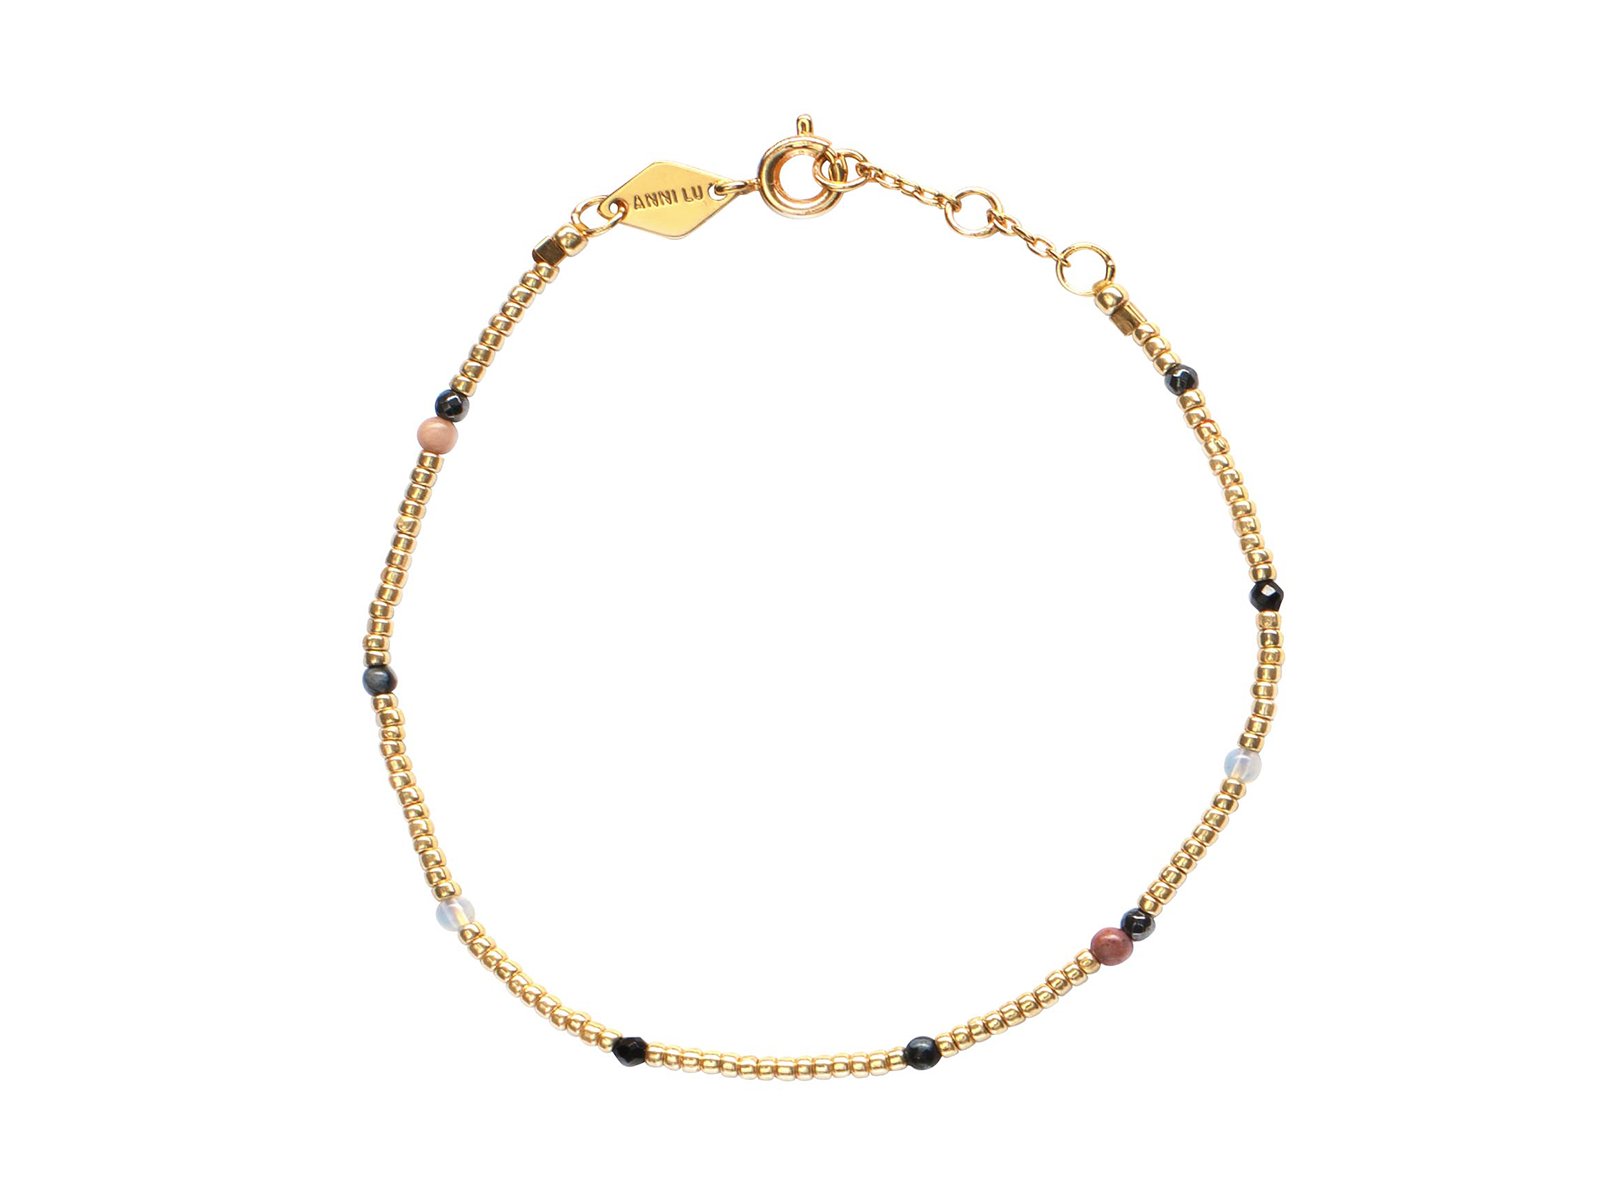 Gold glass bead and gemstone bracelet by Anni Lu